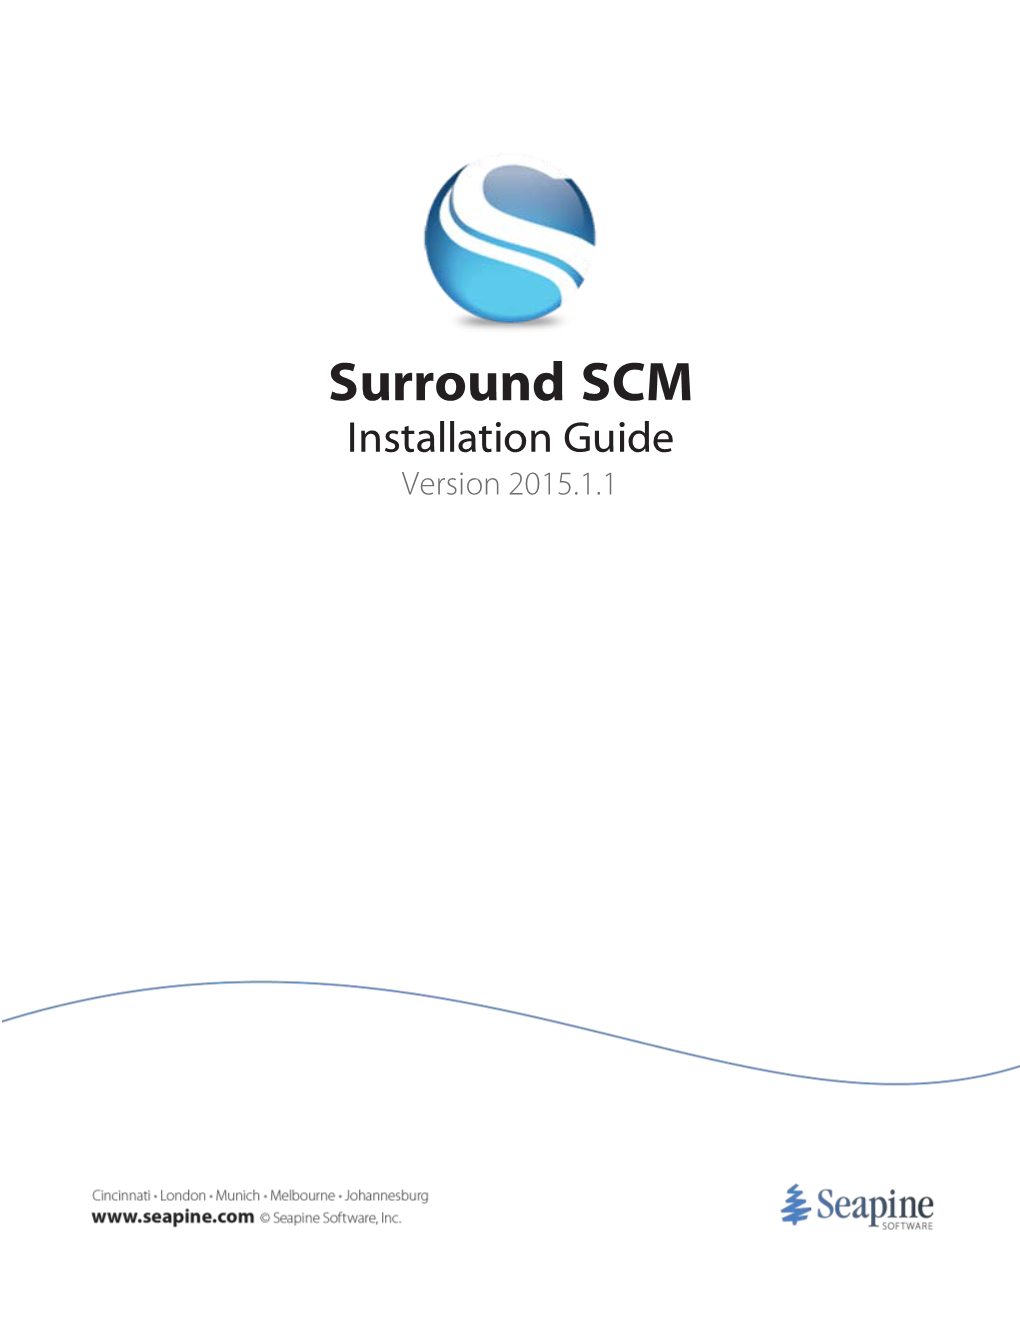 Surround SCM Installation Guide V2015.1.1